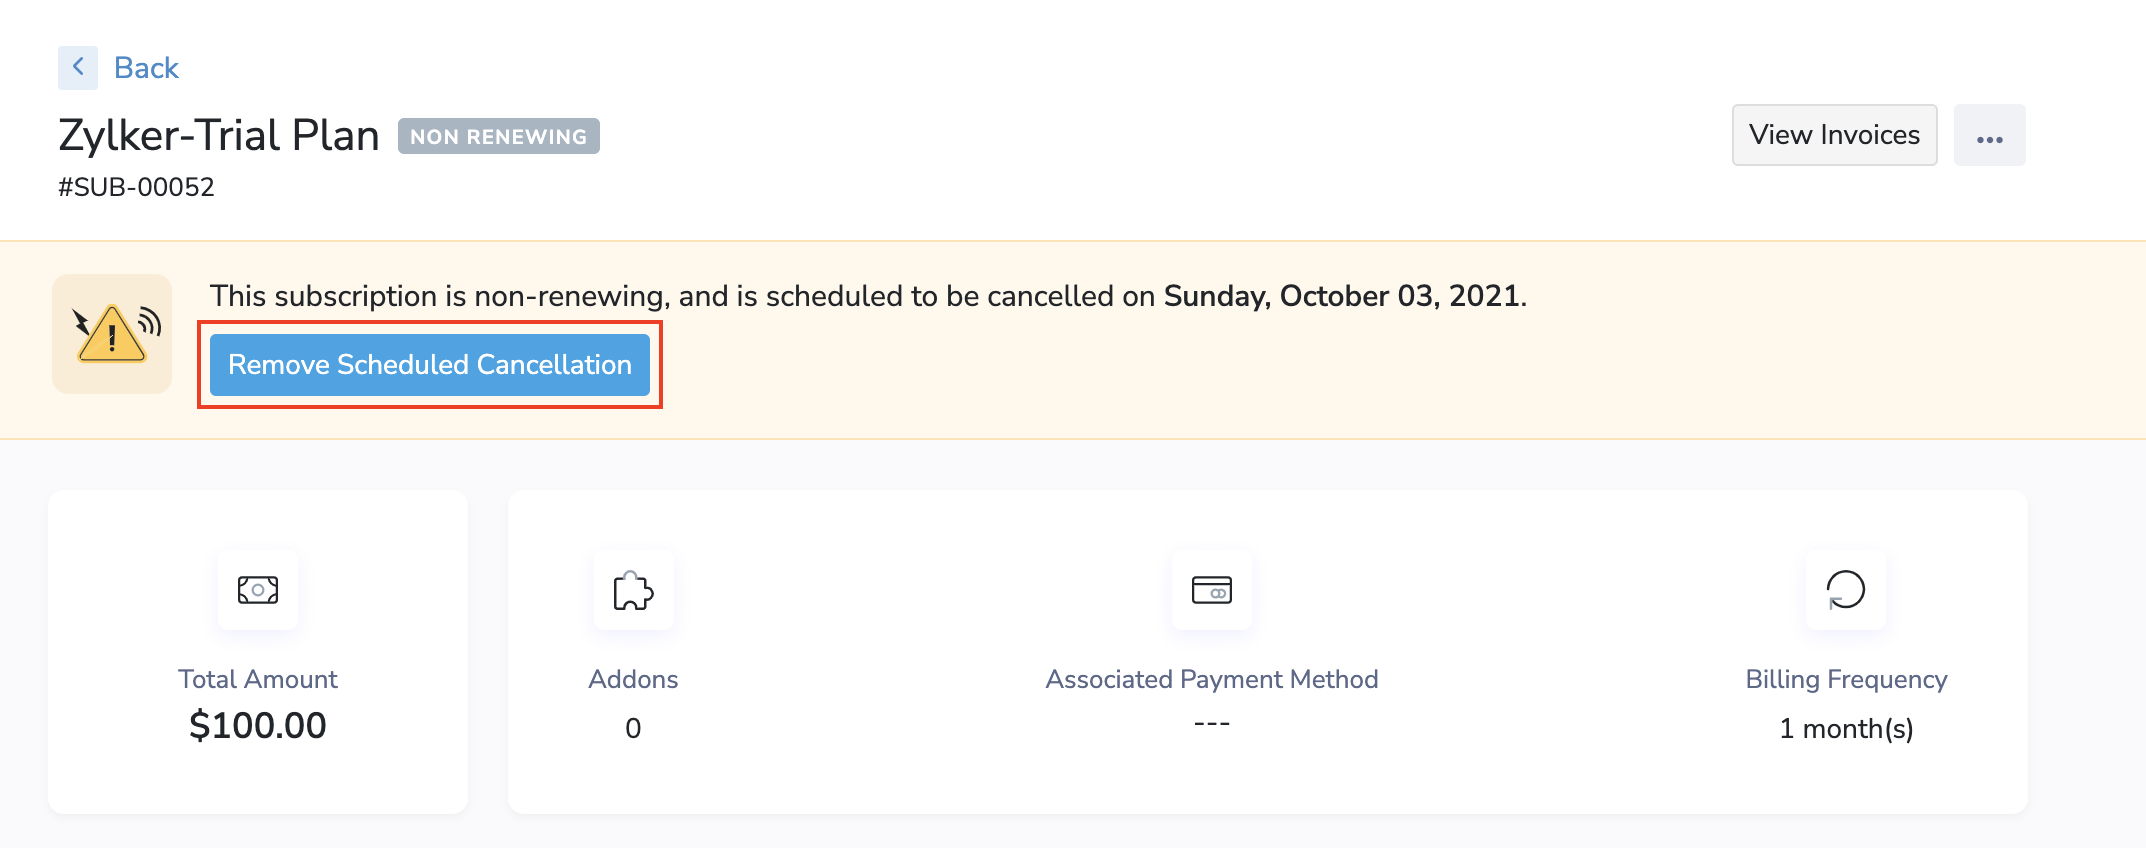 Remove Scheduled Cancellation